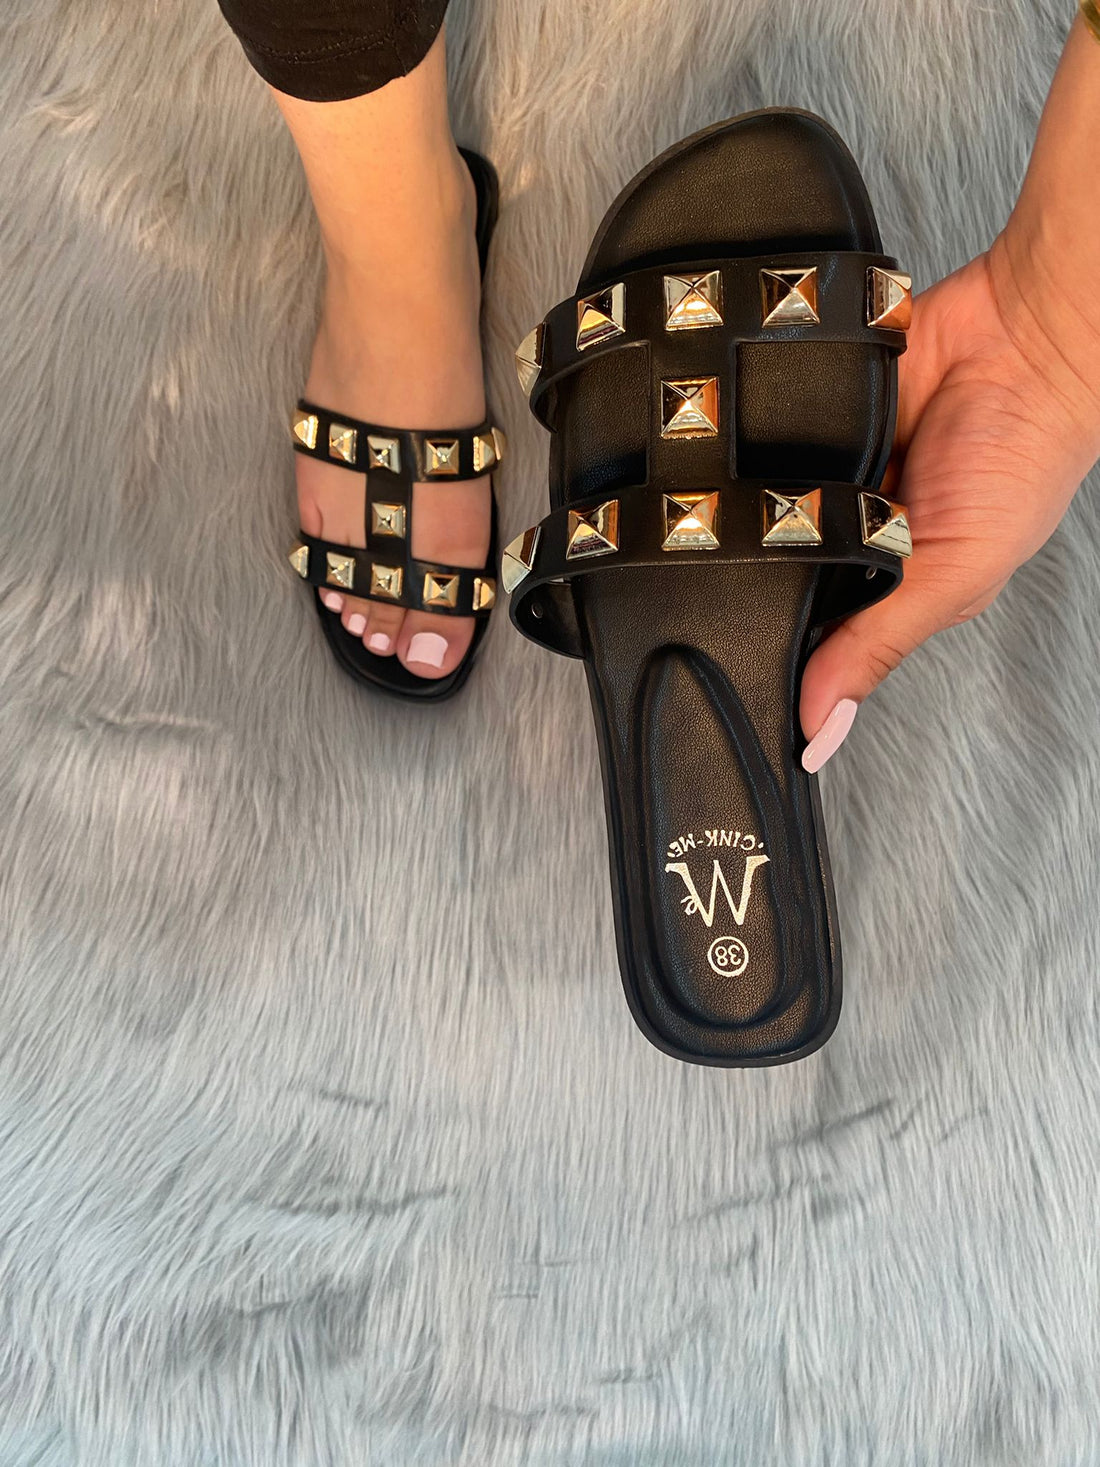 Darlina - Studded Jewel Cut Out Slip On Sandals - Pinstripe